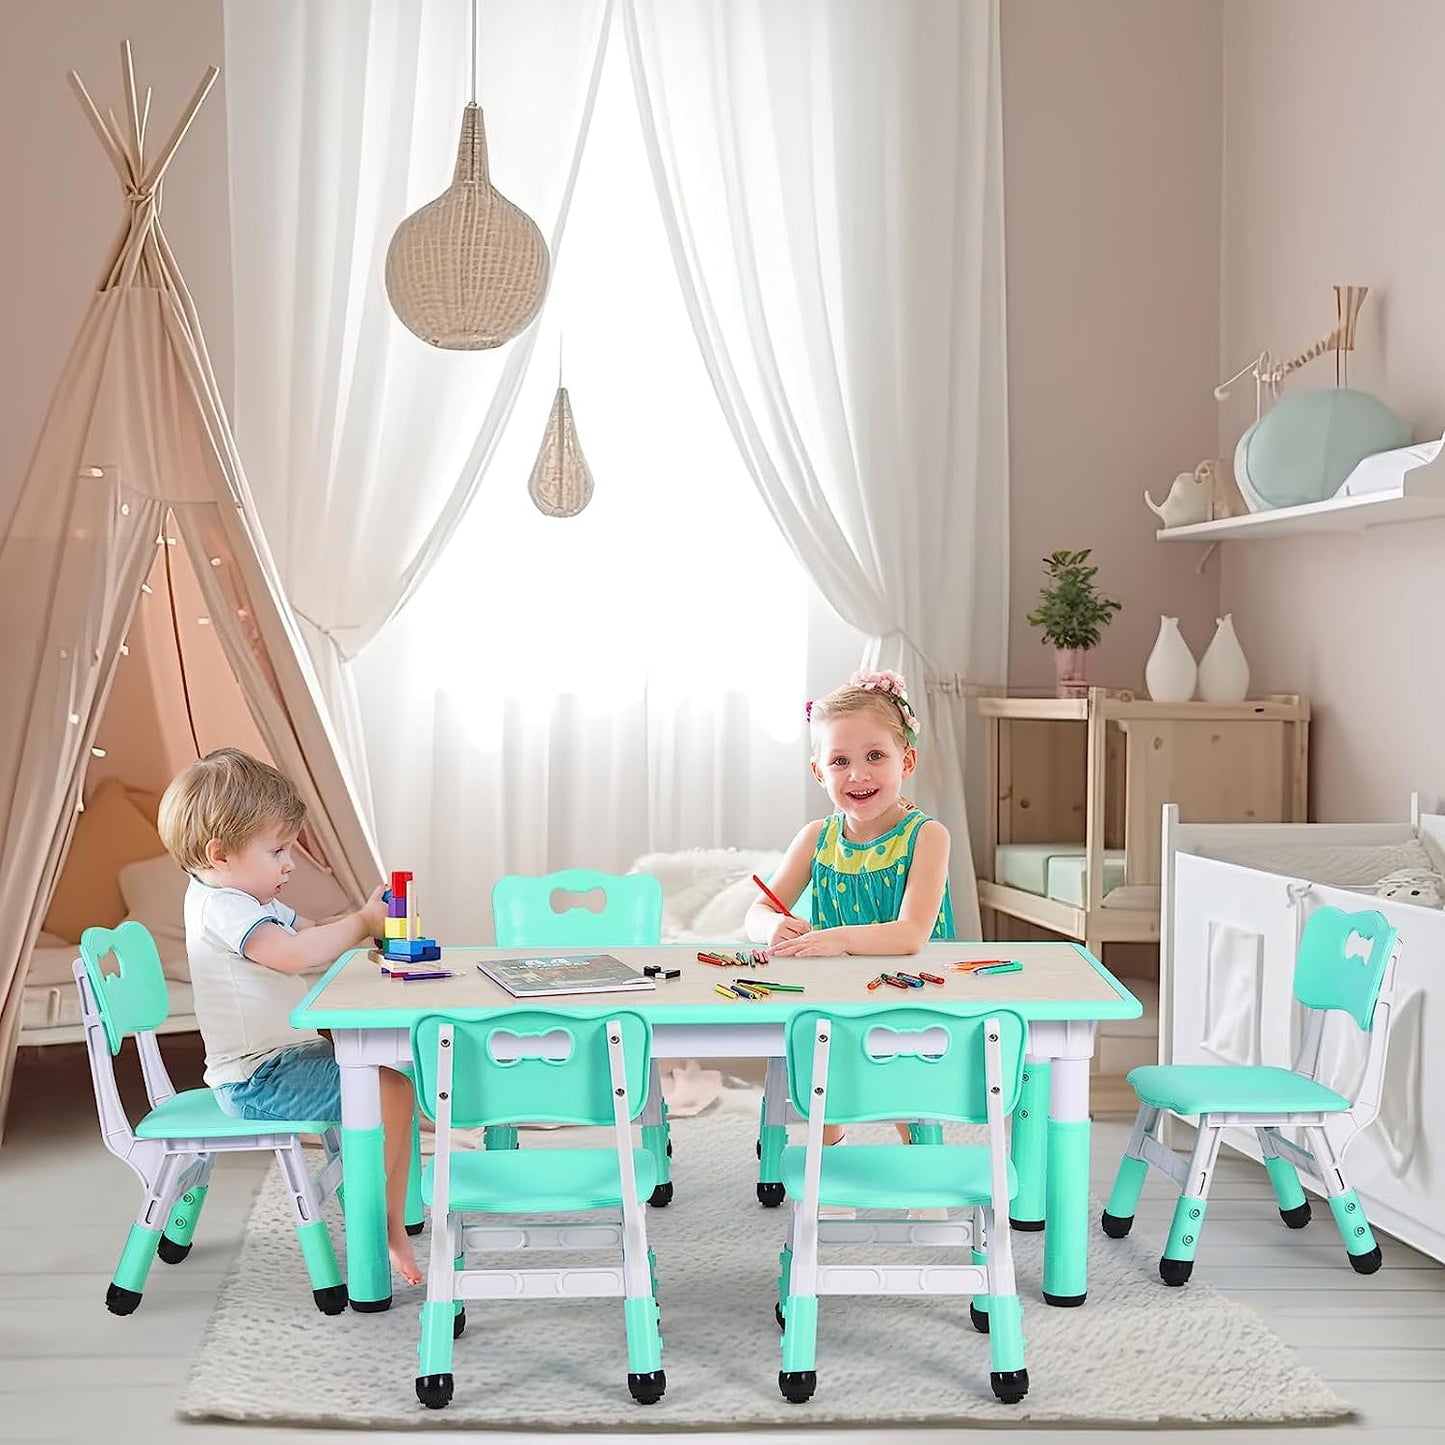 Arlopu Kids Table and Chairs Set, Plastic Toddler Play Table with 6 Chairs Set Graffiti Table for Daycare Classroom Playroom